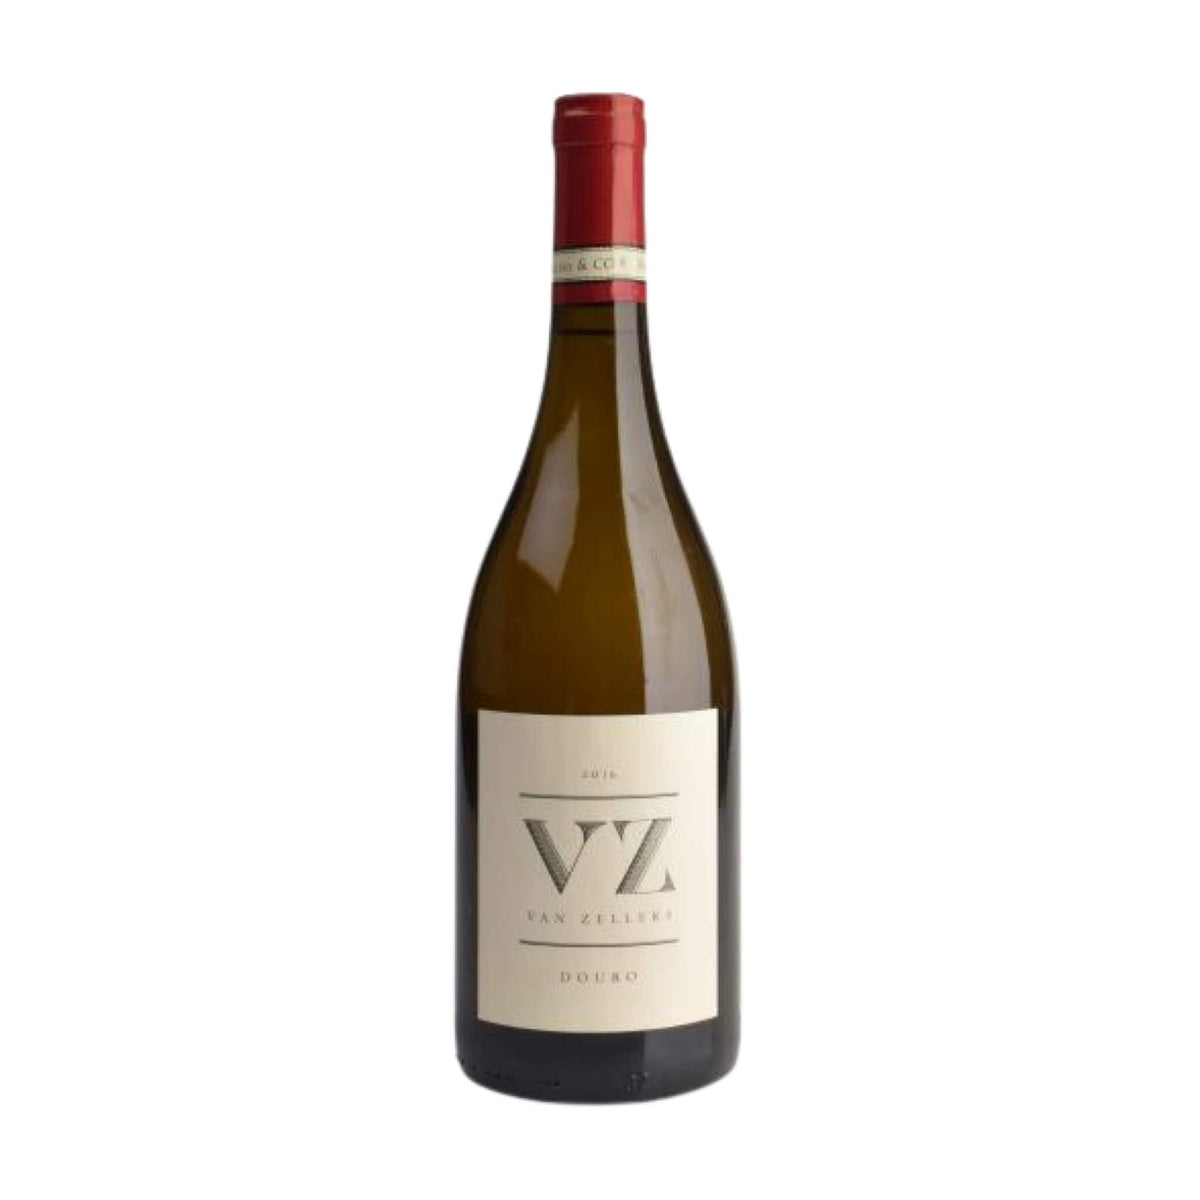 Van Zeller-Weißwein-Viosinho, Rabigato, Codega, Gouveio-2016 VZ Douro White DOC-WINECOM